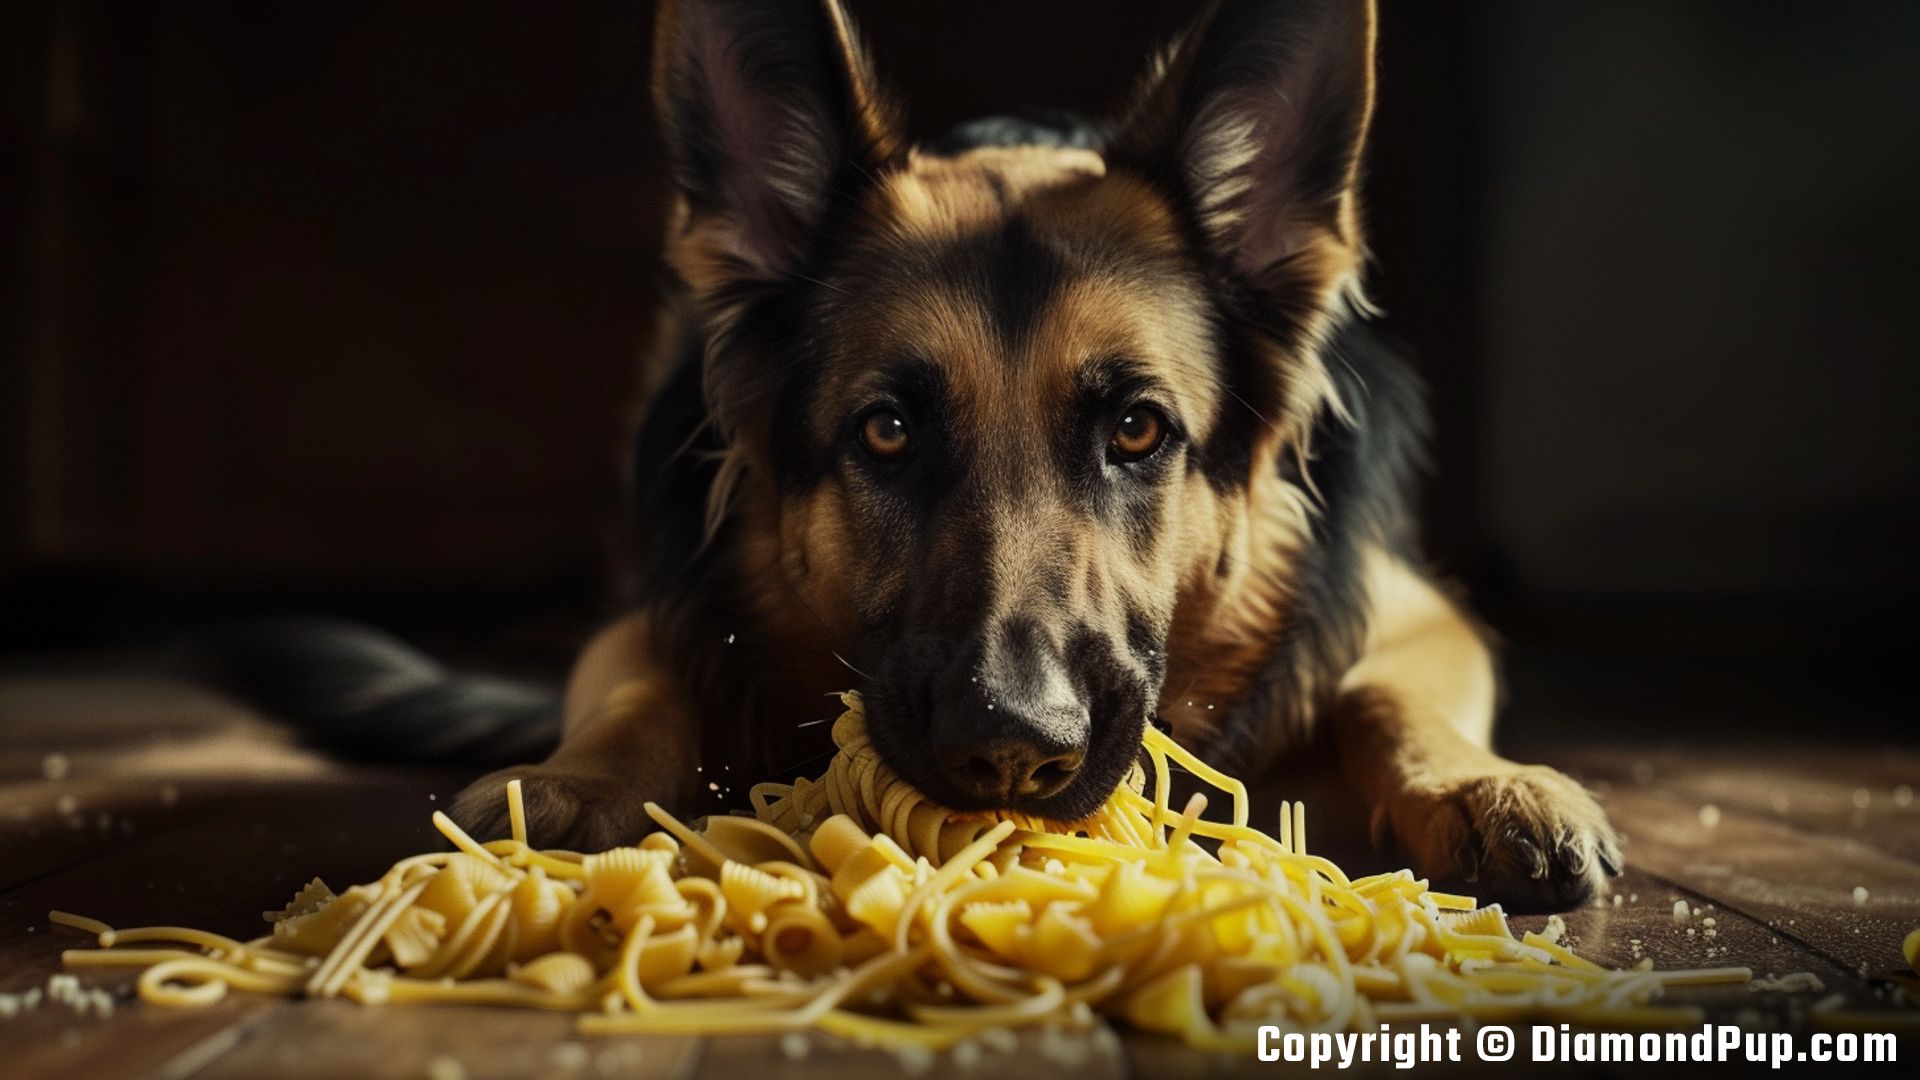 Photograph of a Playful German Shepherd Eating Pasta